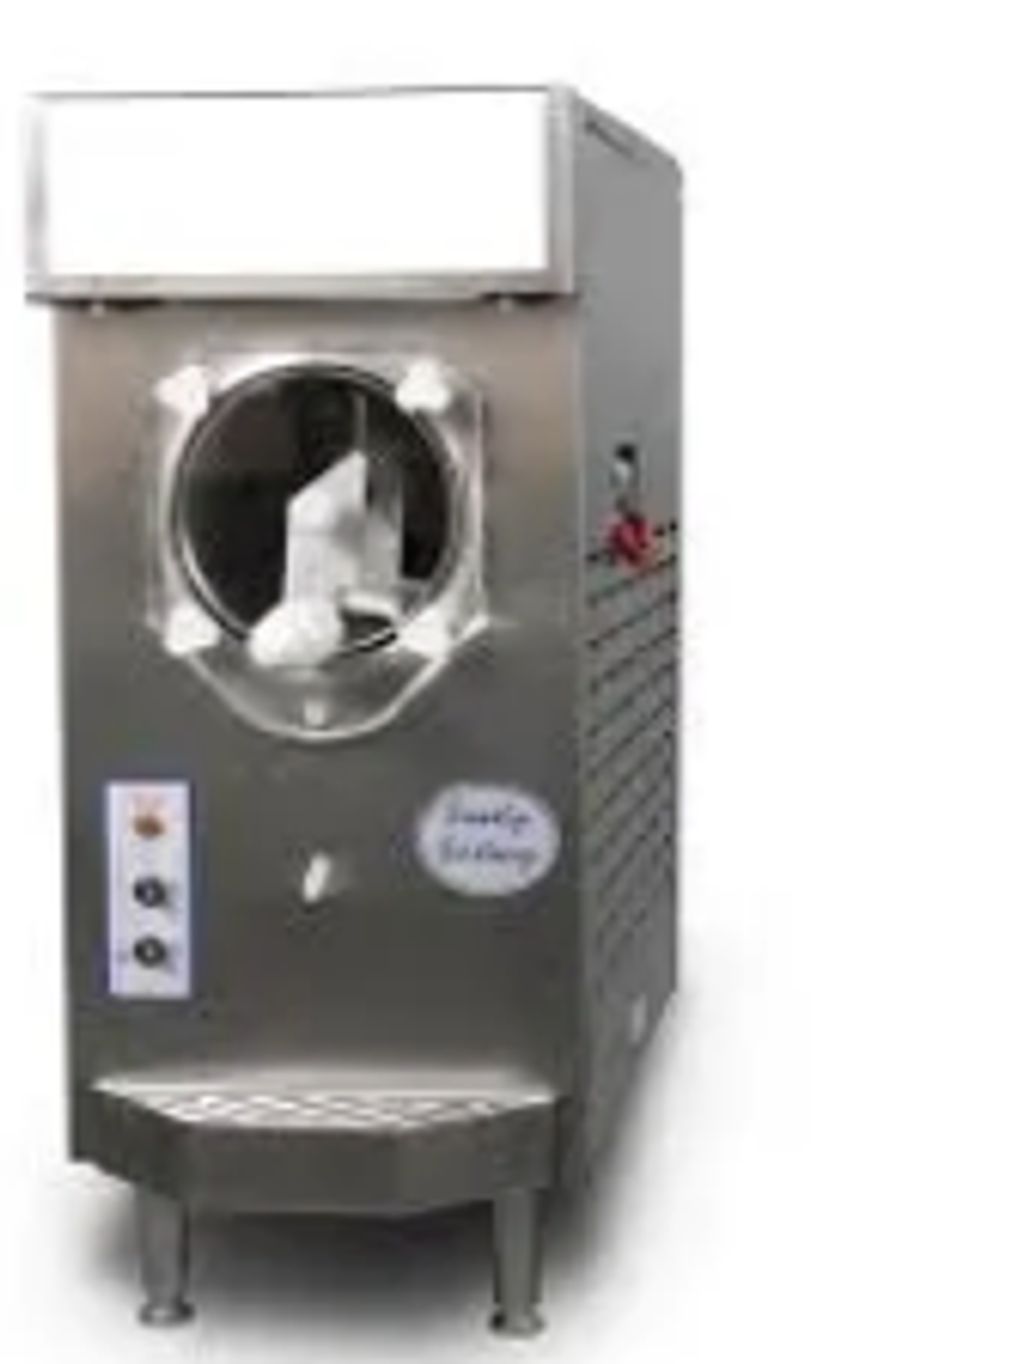 Frozen drink machine rentals.  Single and double frozen drink machines for rent.